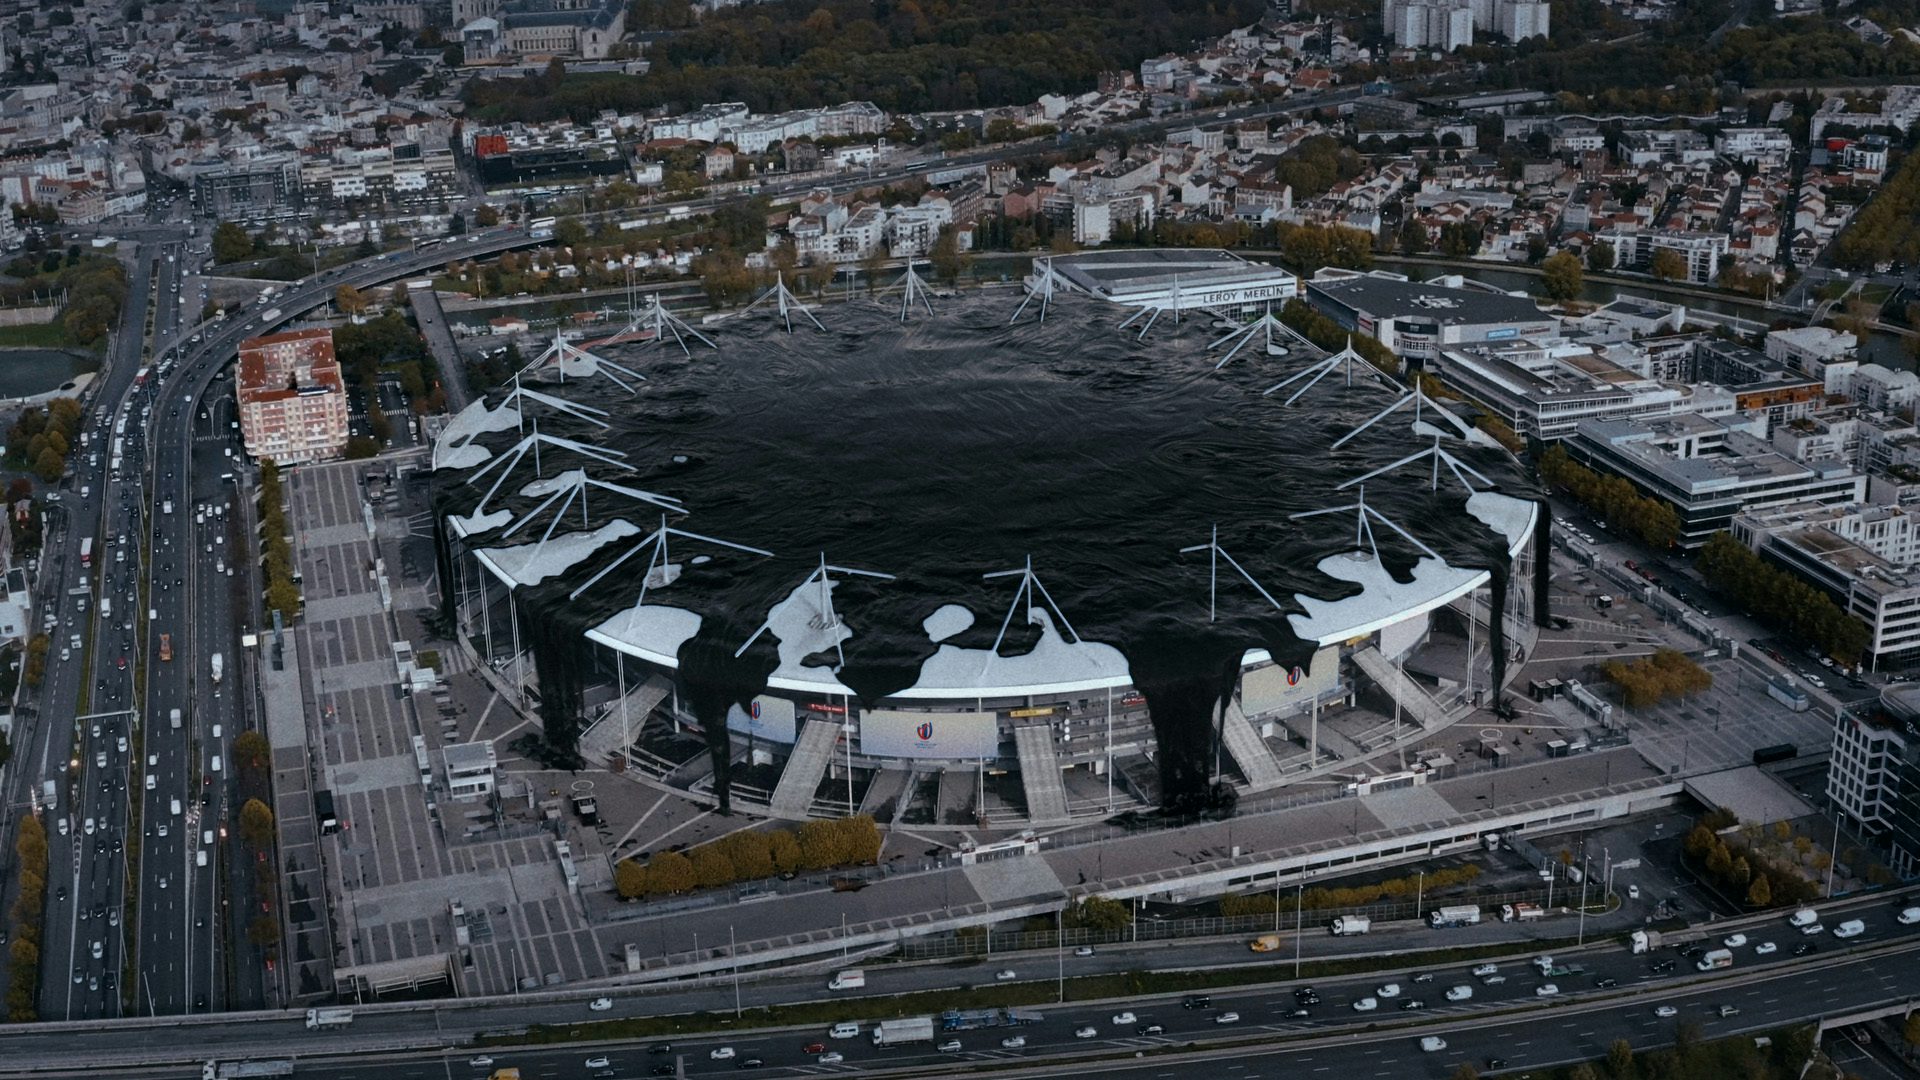 Stade de France - 3D Model by SQUIR